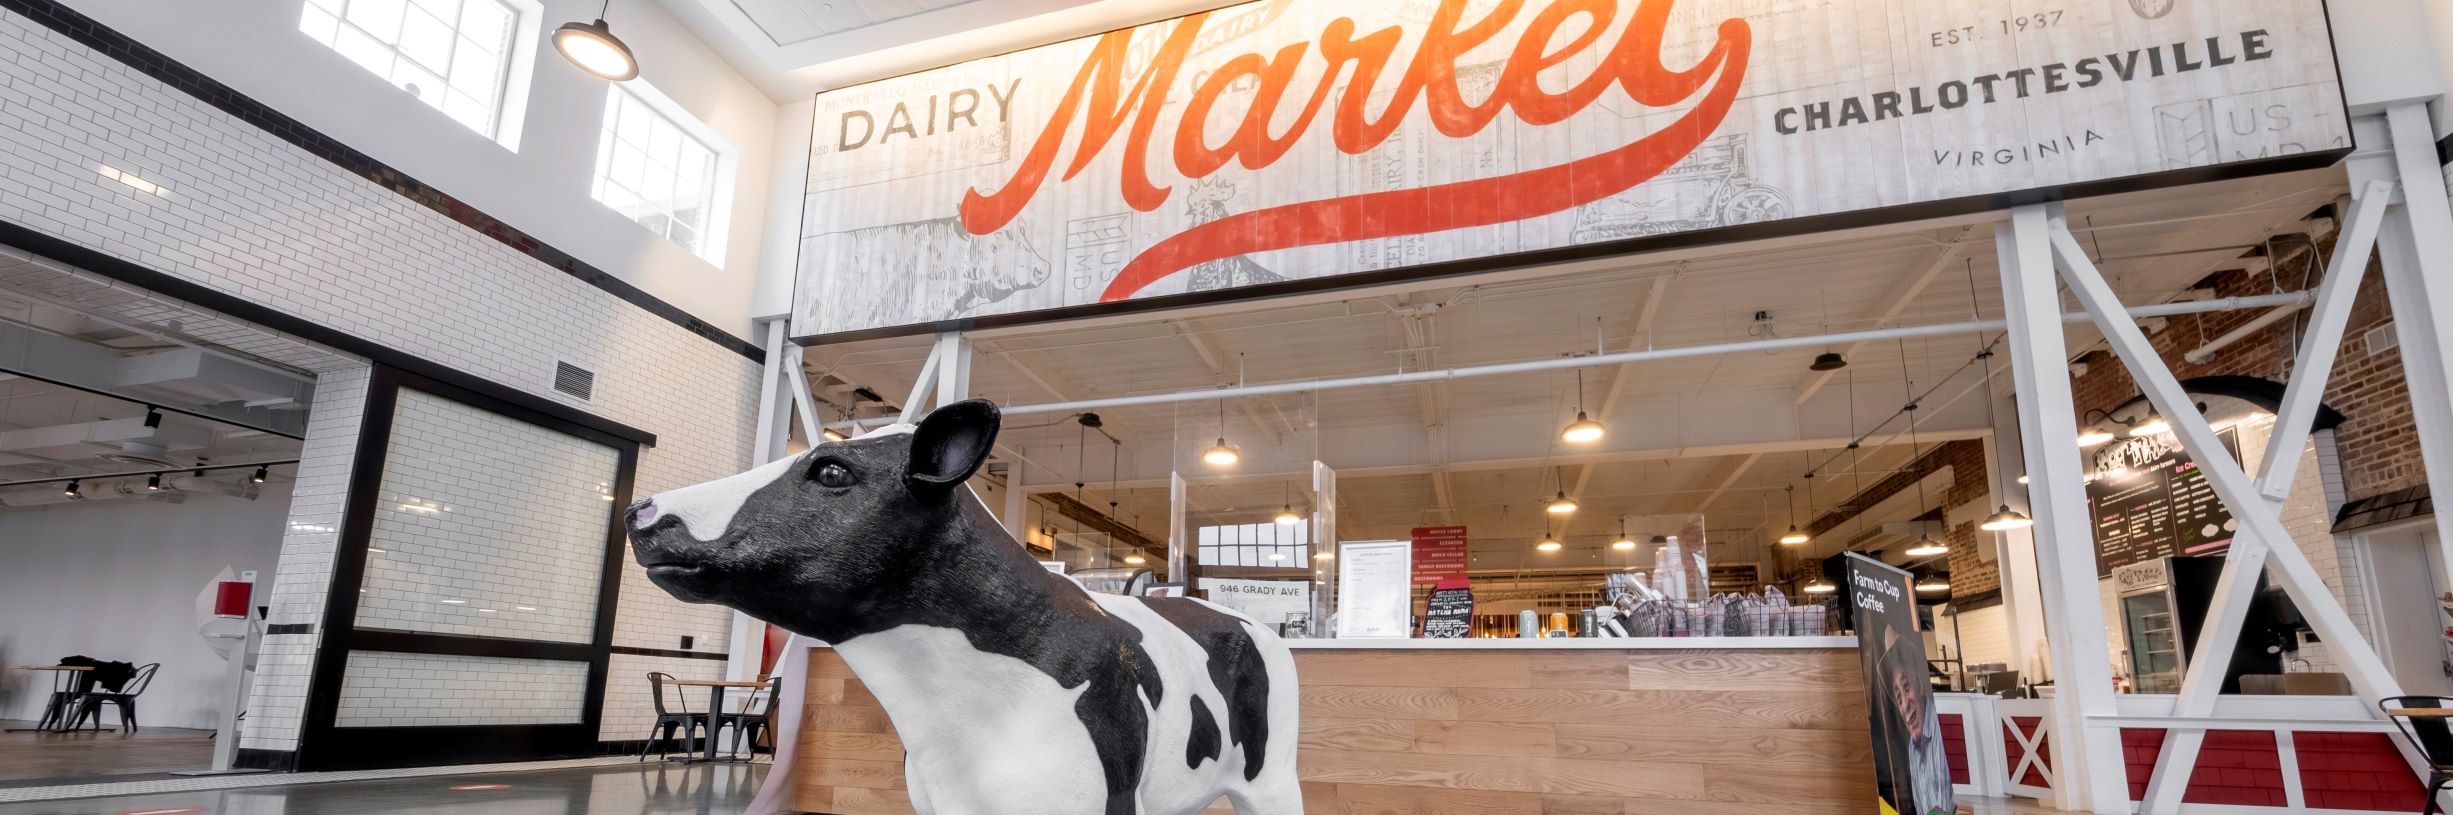 Pretend Cow in Dairy Market Entrance